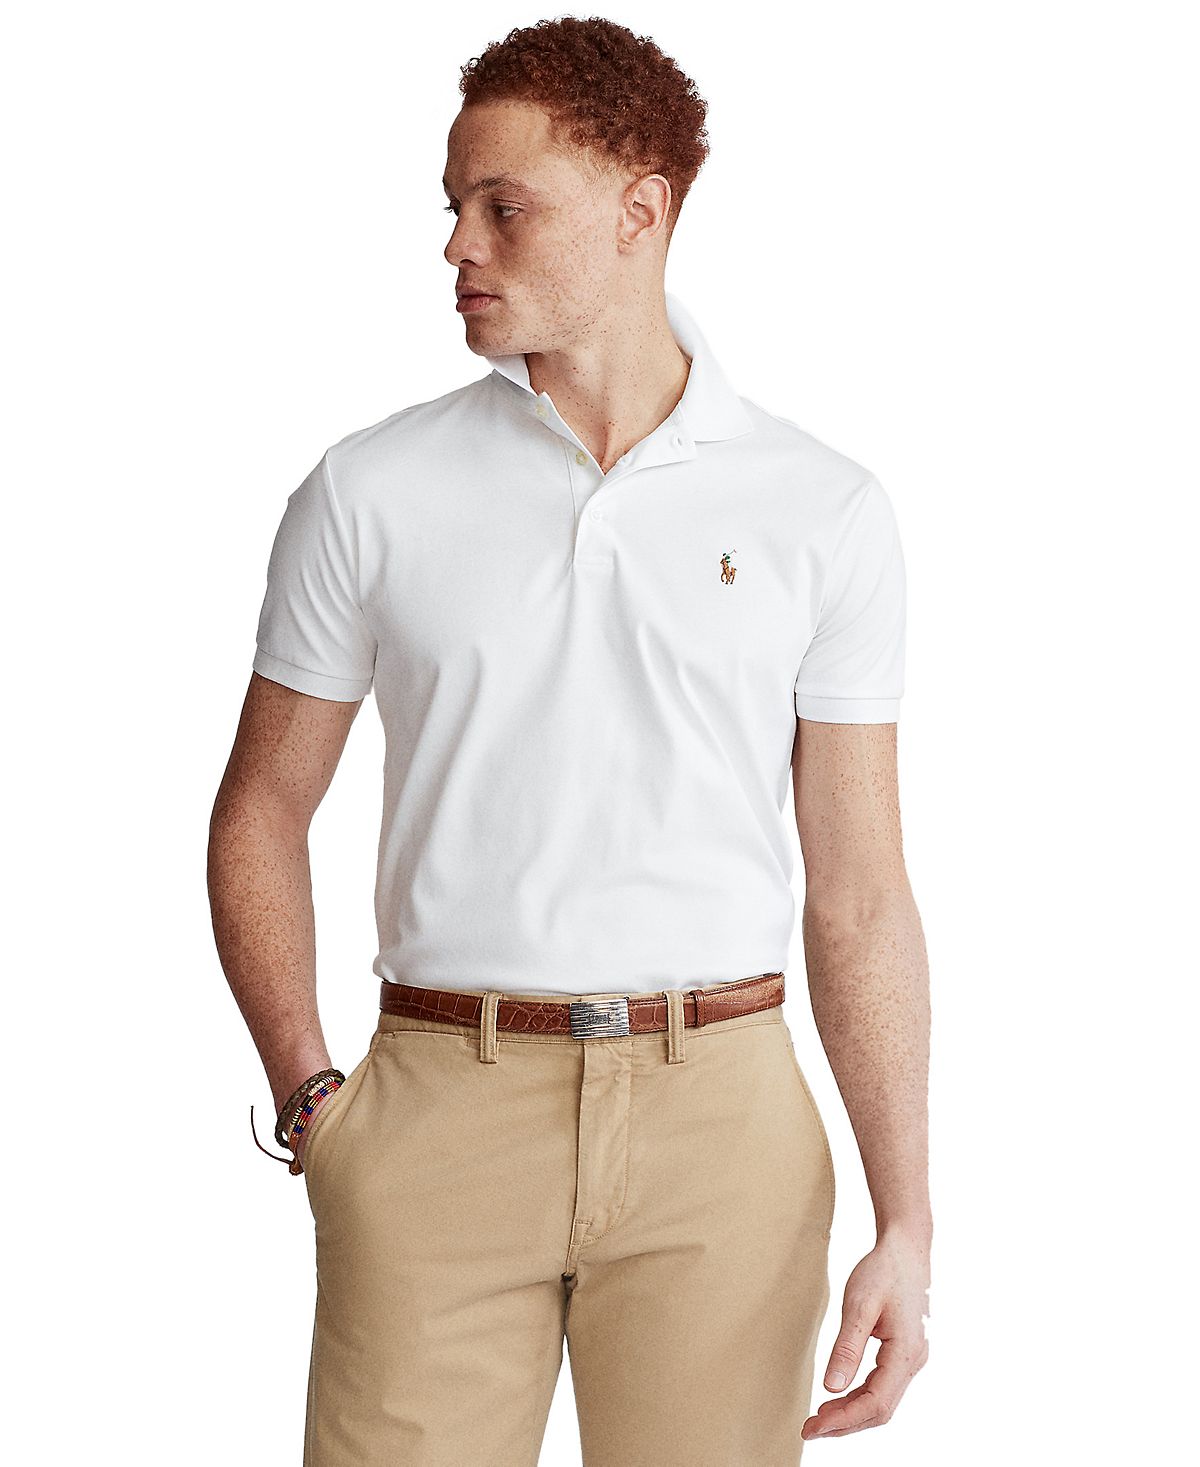 Мужская рубашка-поло slim fit из хлопка на заказ Polo Ralph Lauren, белый